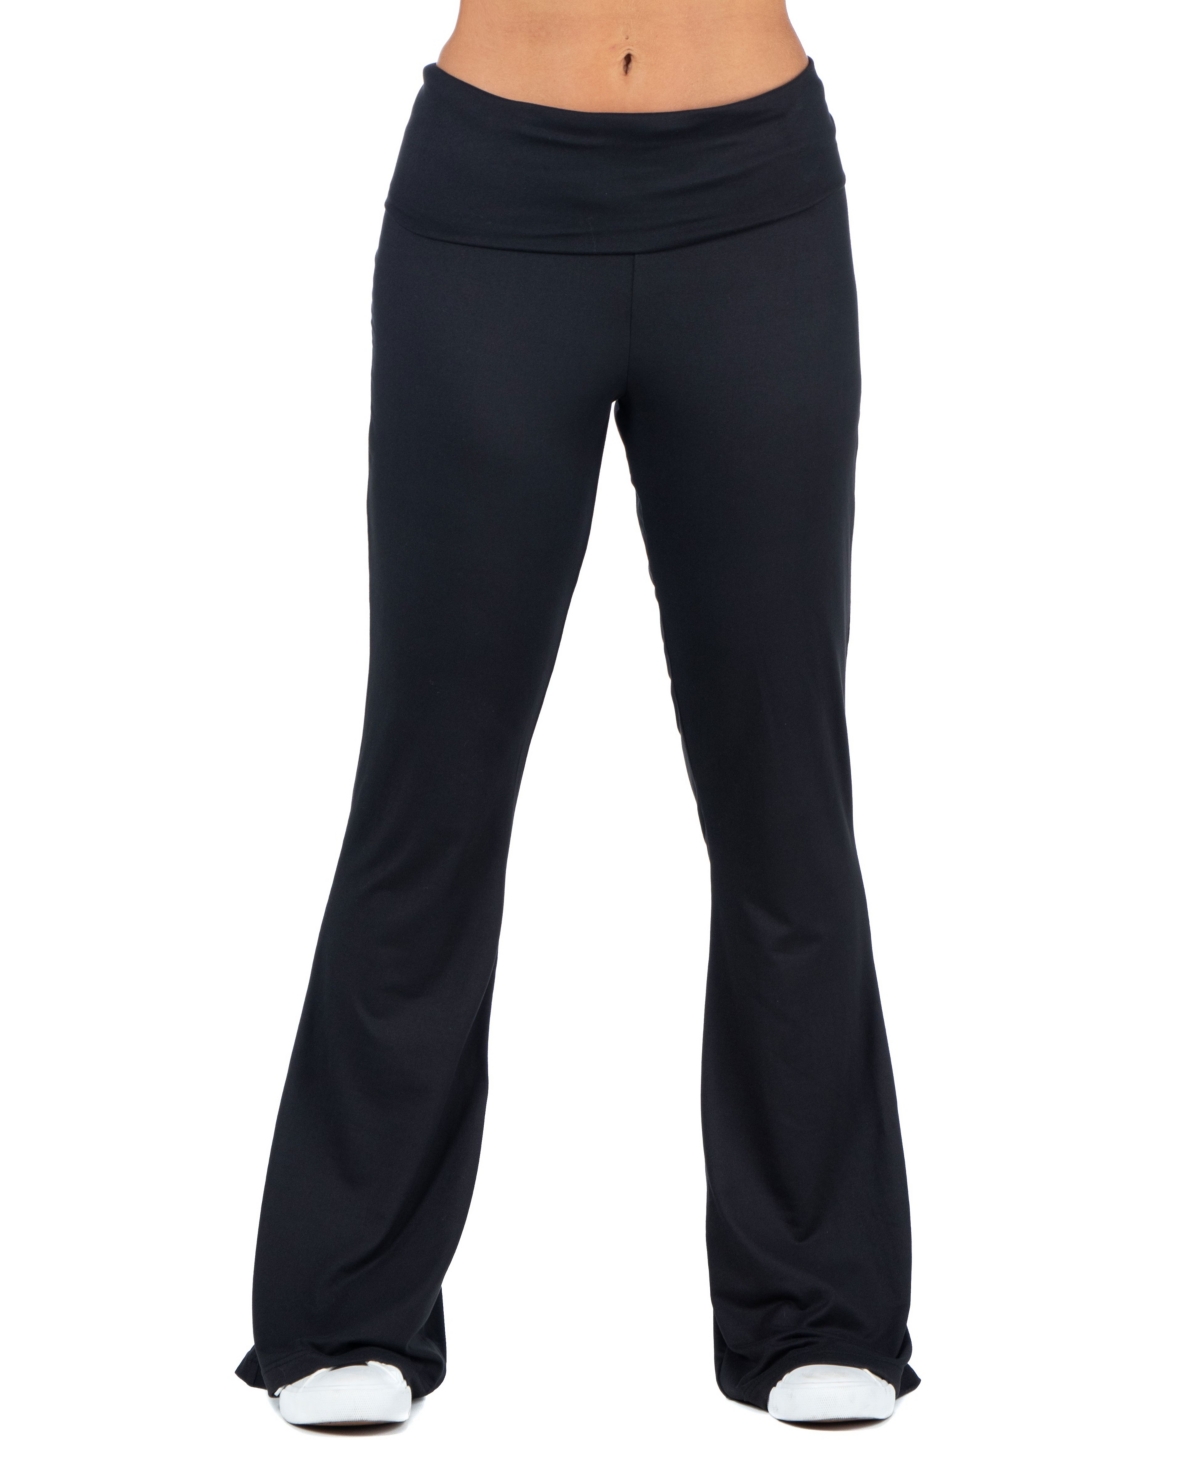 Women's Plus Size Bell Bottom Foldover Waist Sweatpants - Black